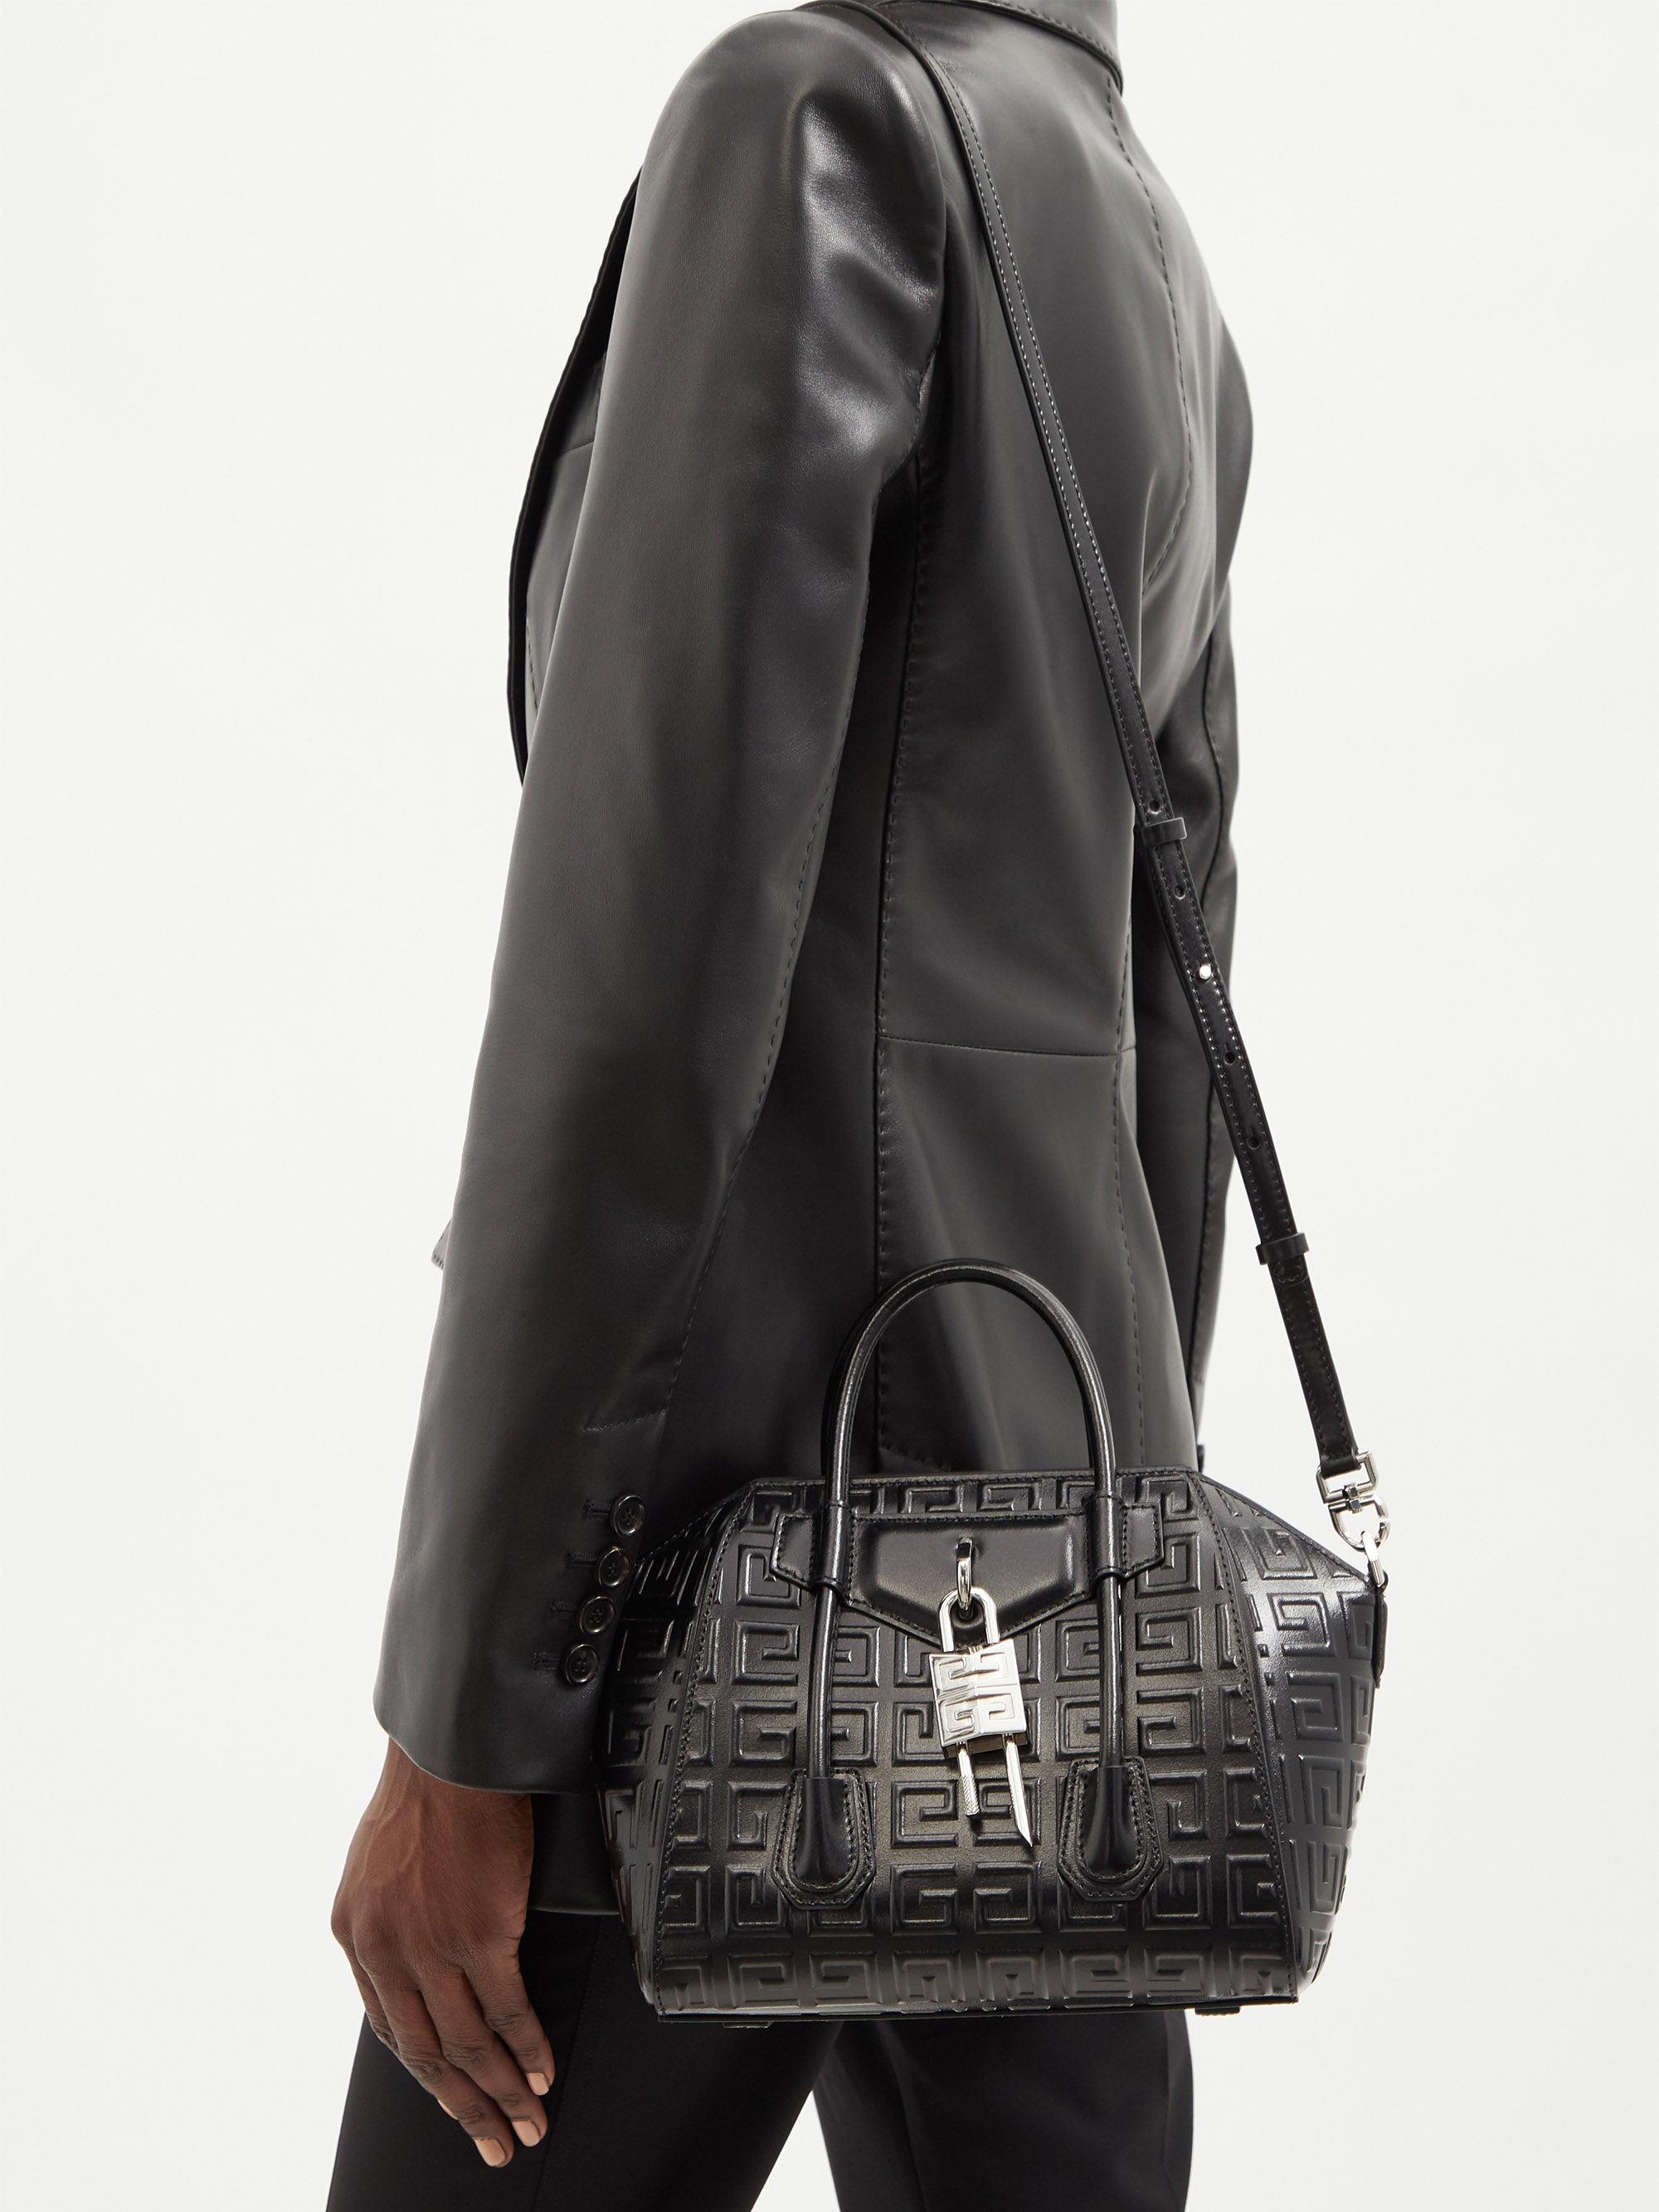 Givenchy Antigona Lock Mini 4g Leather Shoulder Bag in Black | Lyst